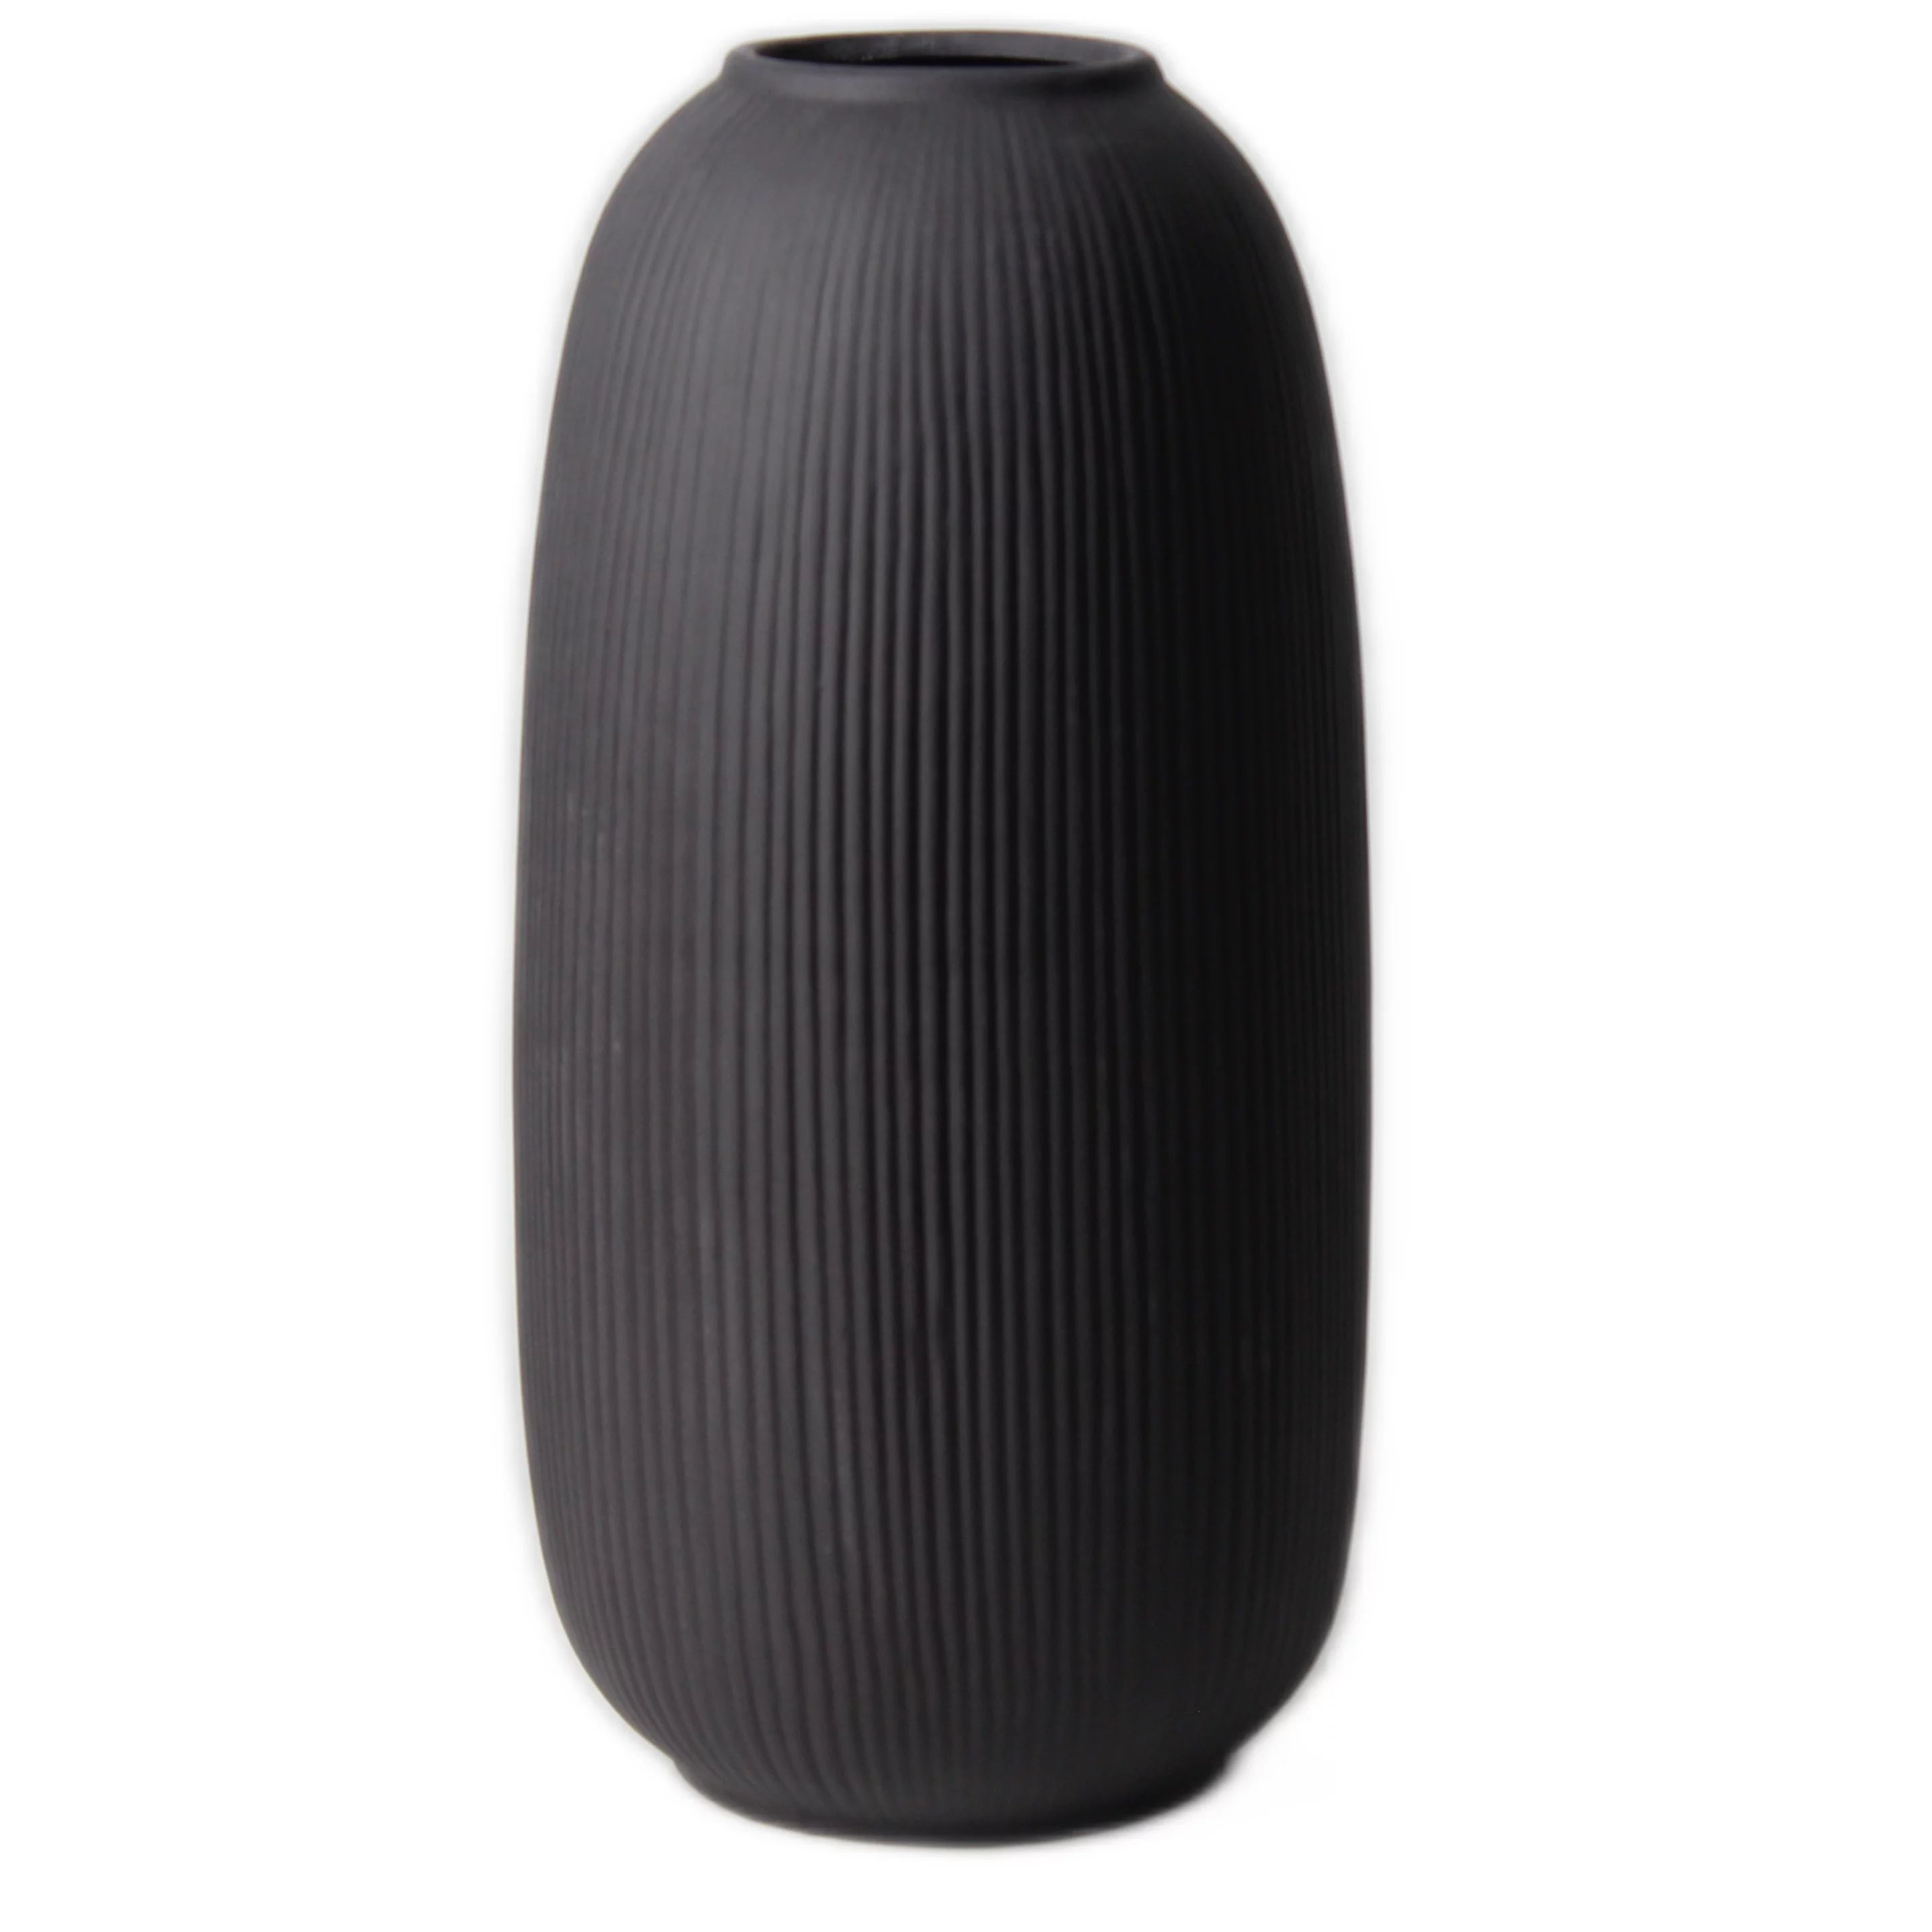 Portsea Lines Clay Vase in Dark Grey Charcoal Black - Toughened Ceramic Vase - 10 Inch Flower Vas... | Walmart (US)